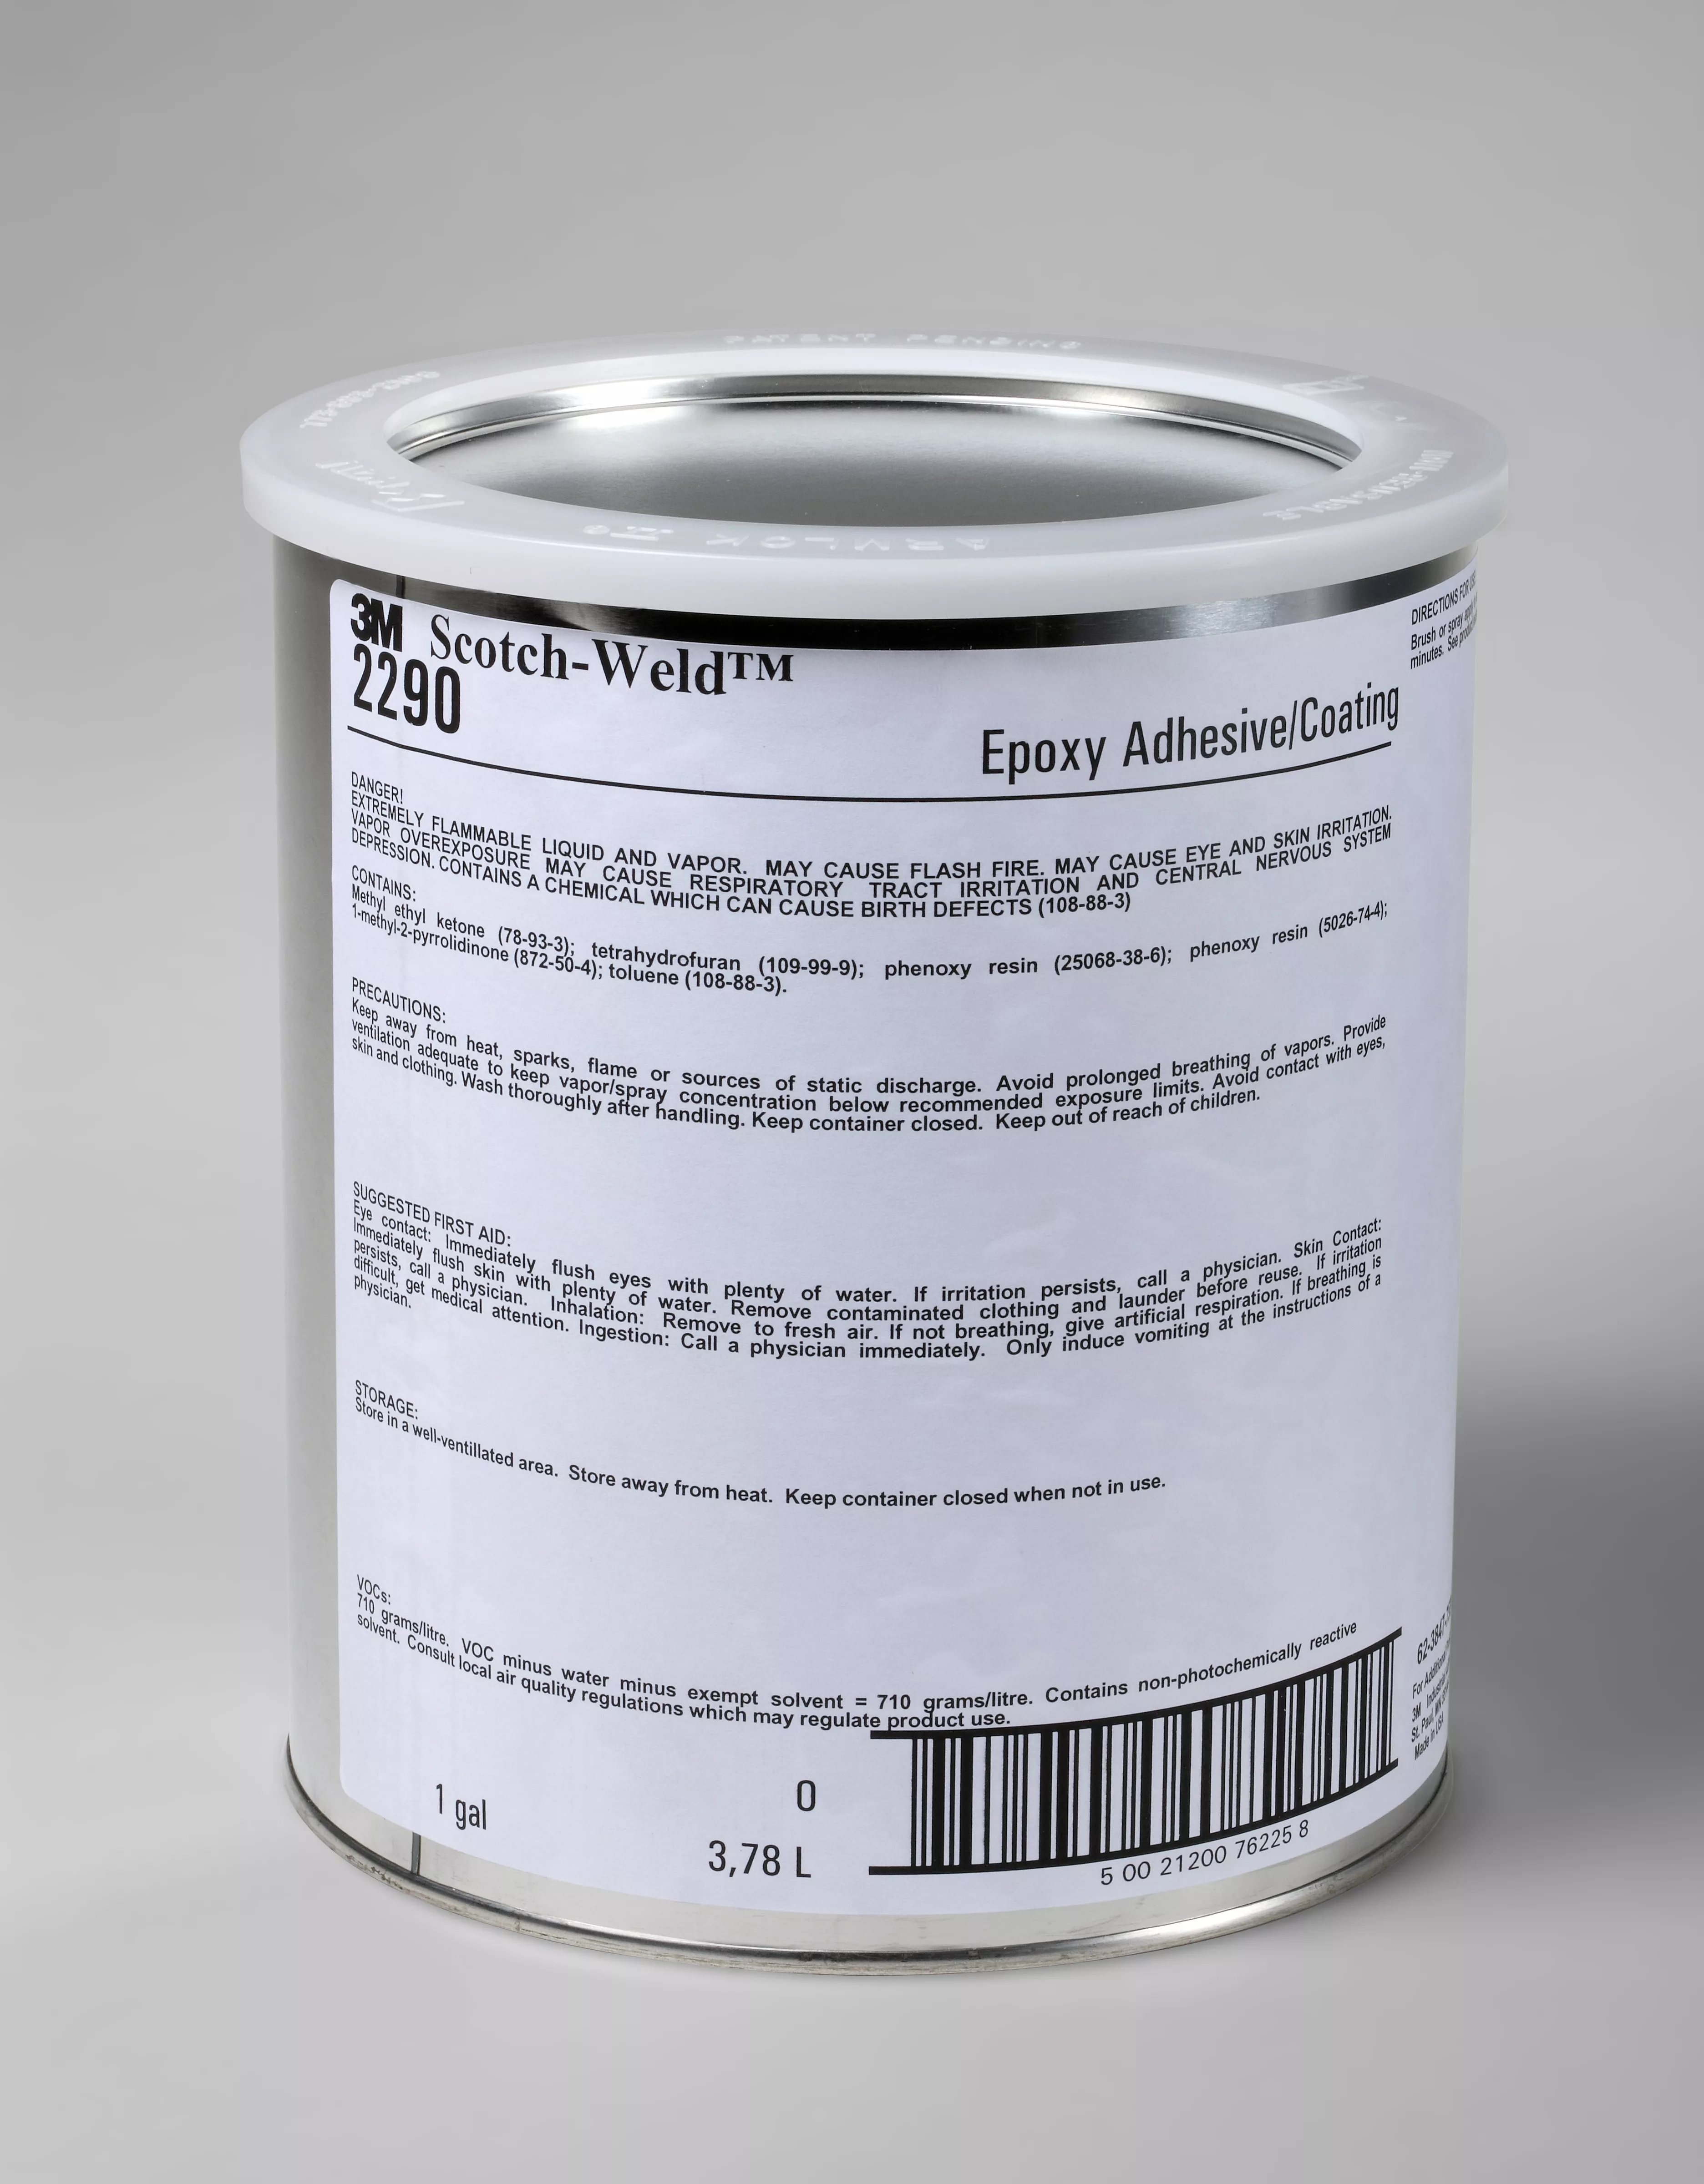 3M™ Scotch-Weld™ Epoxy Adhesive/Coating 2290, Amber, 1 Gallon, 4
Can/Case